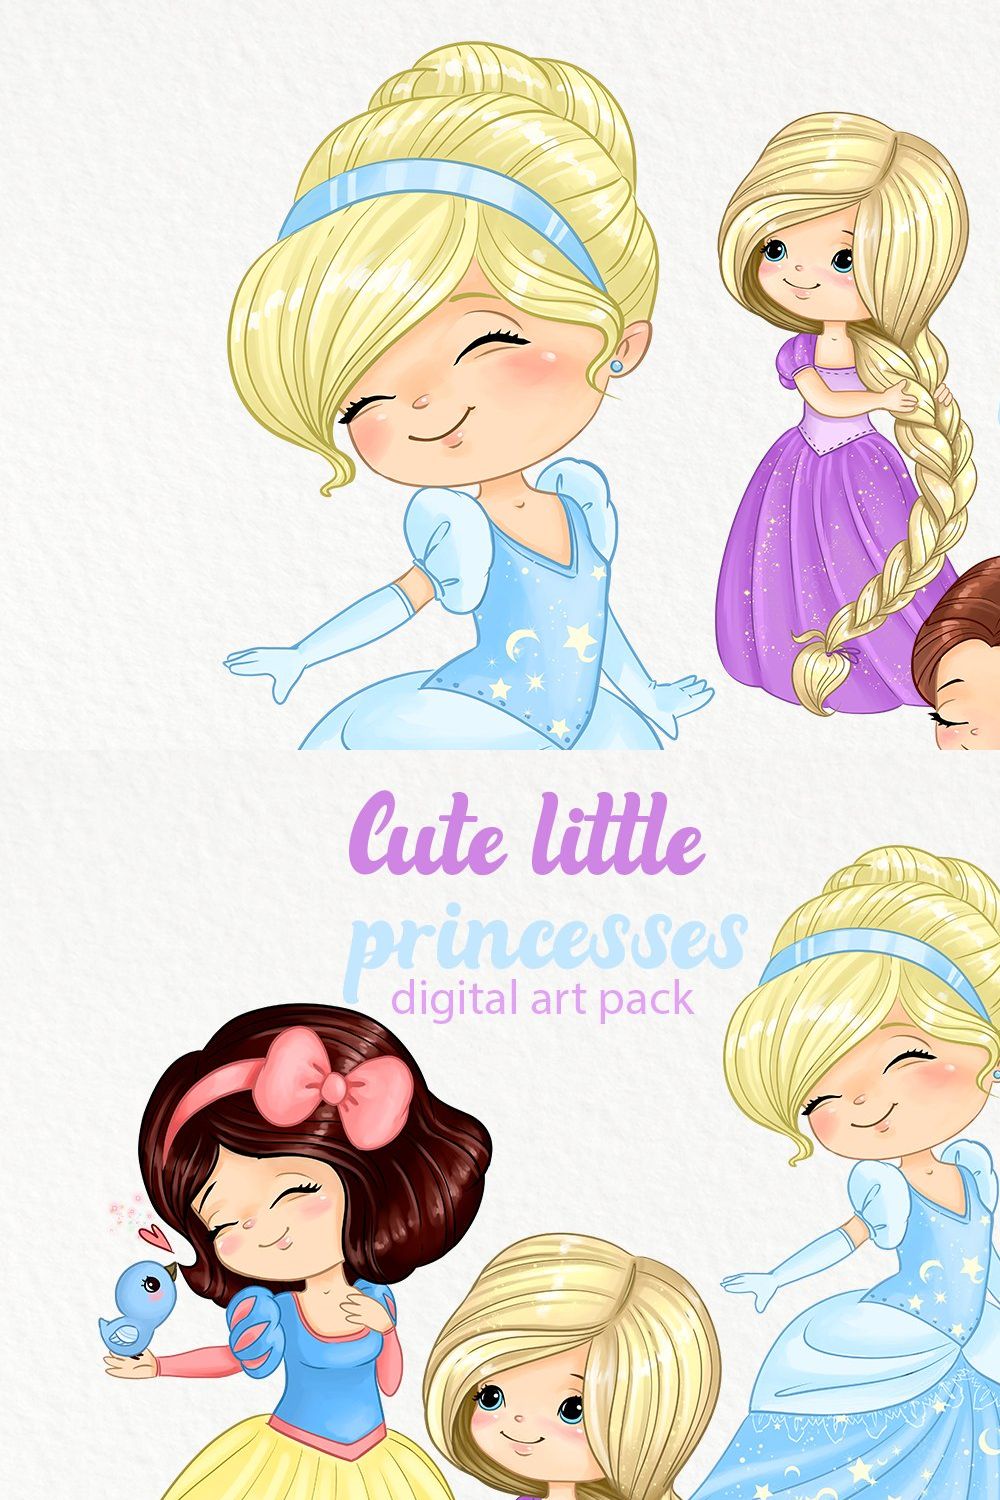 Cute princess PNG clipart download. pinterest preview image.